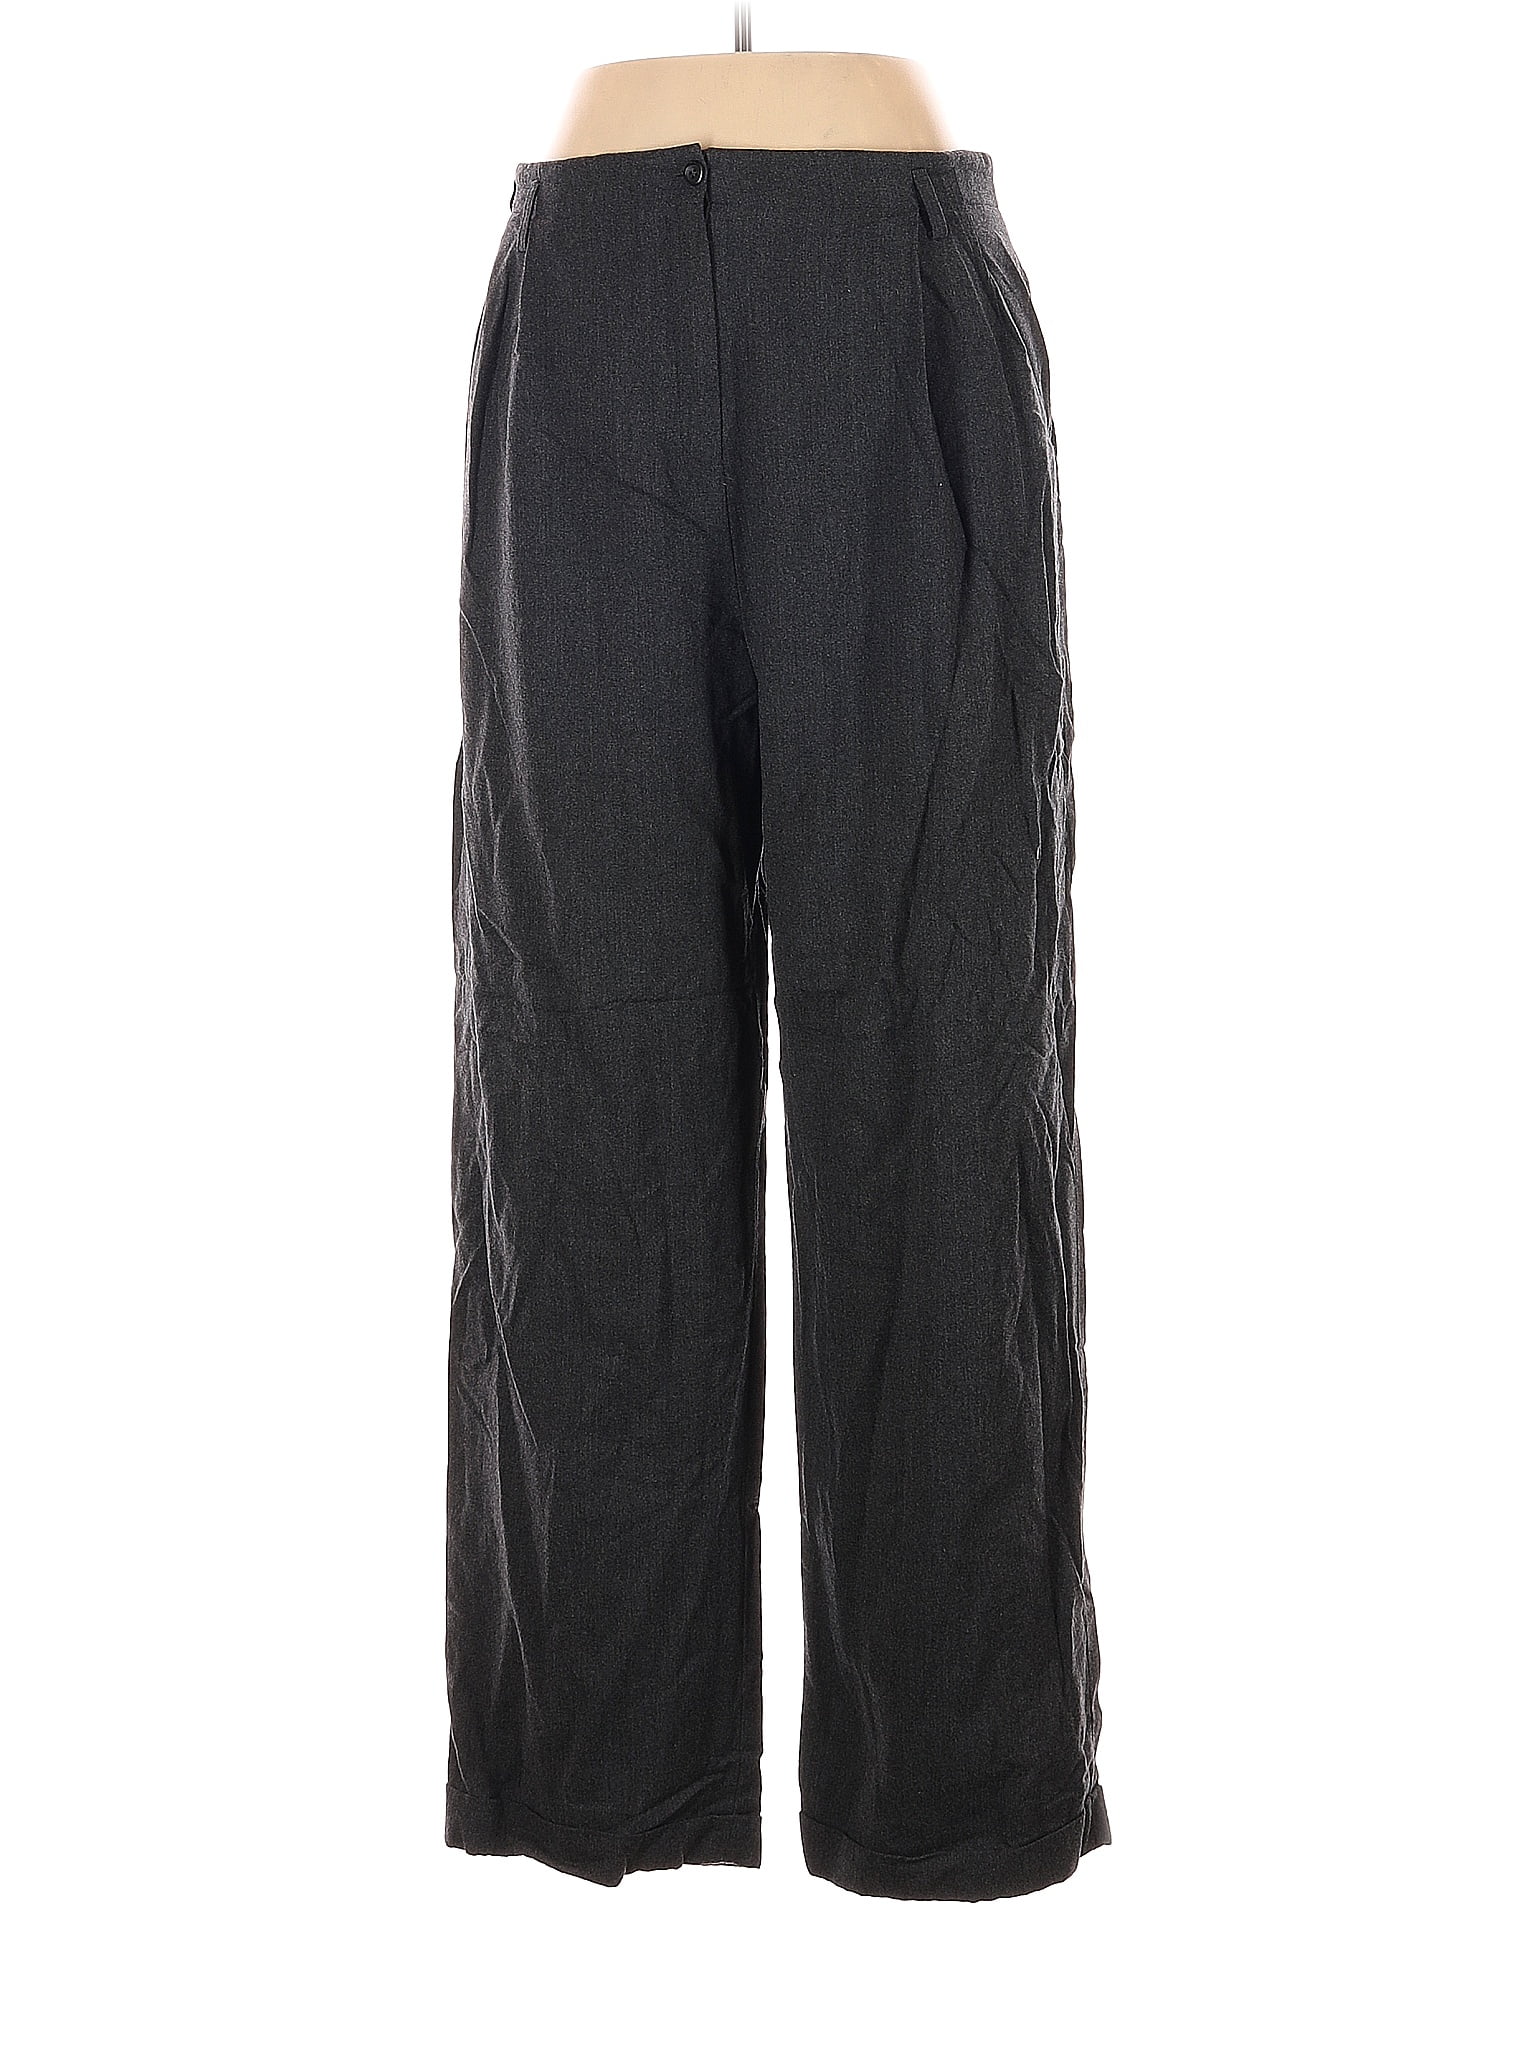 Jones New York Black Gray Wool Pants Size 16 - 74% off | thredUP